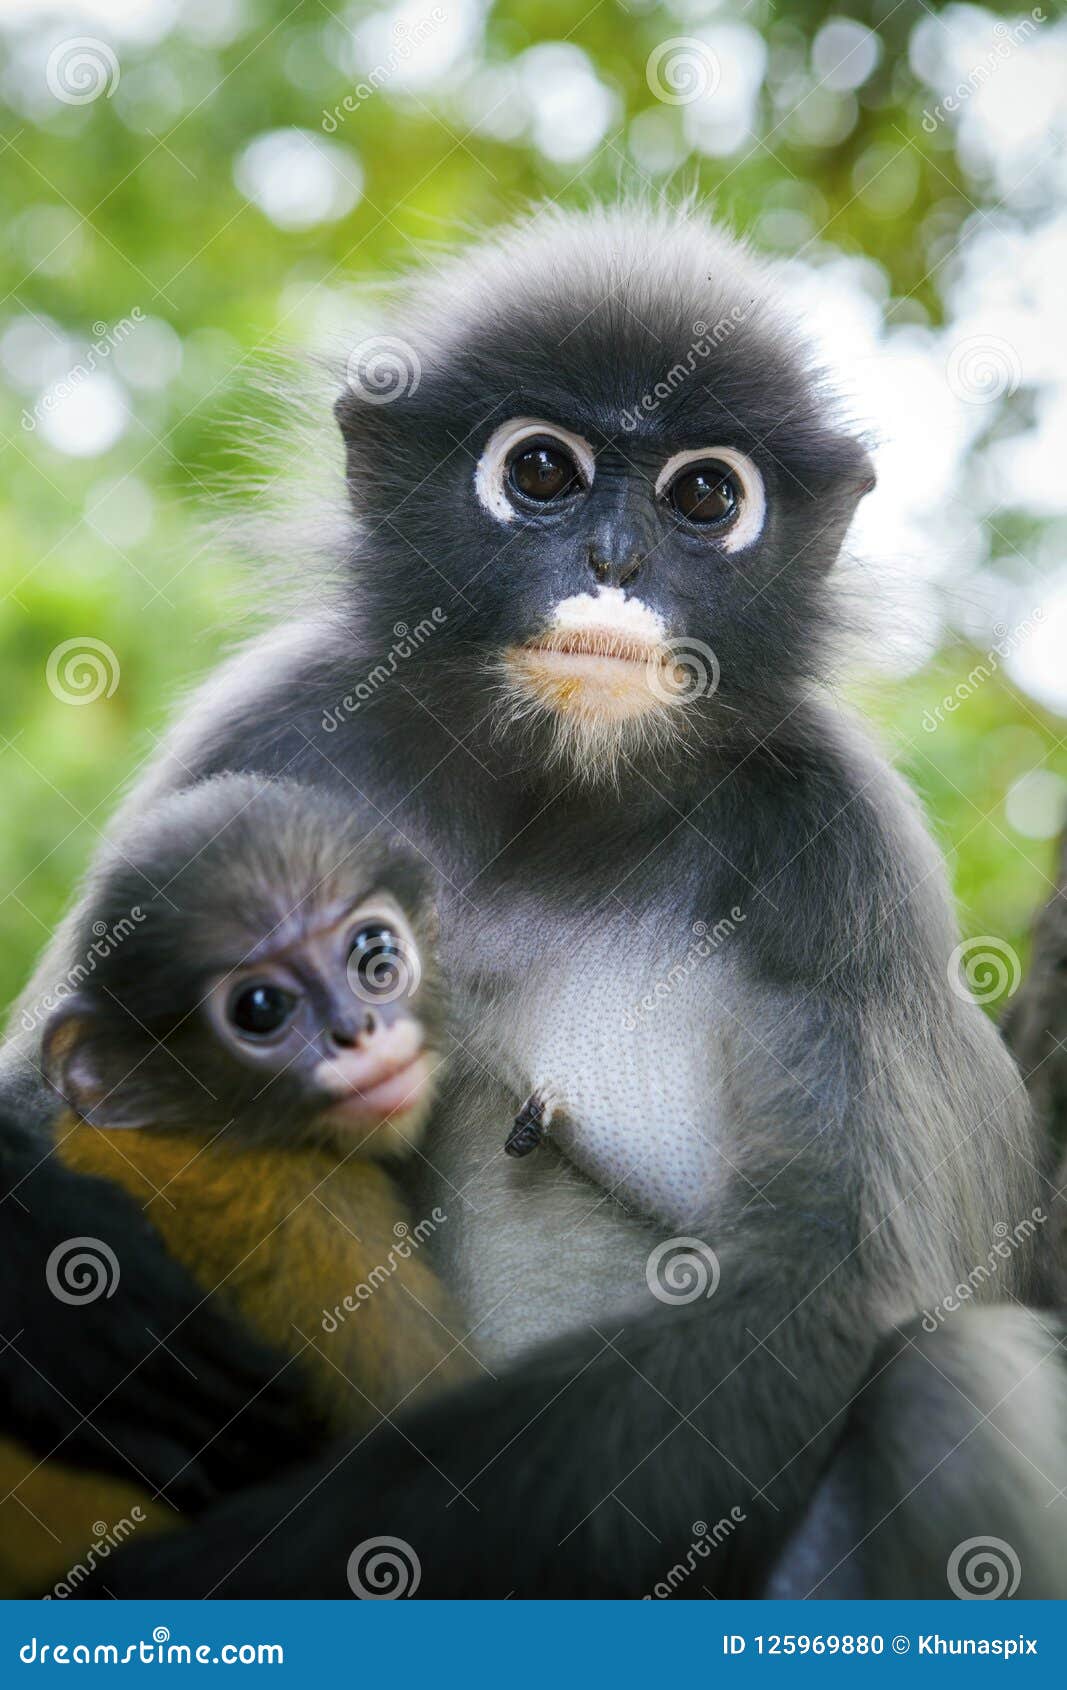 Wilderness Dusky Leaf Monkey and Baby in Hug Stock Photo - Image